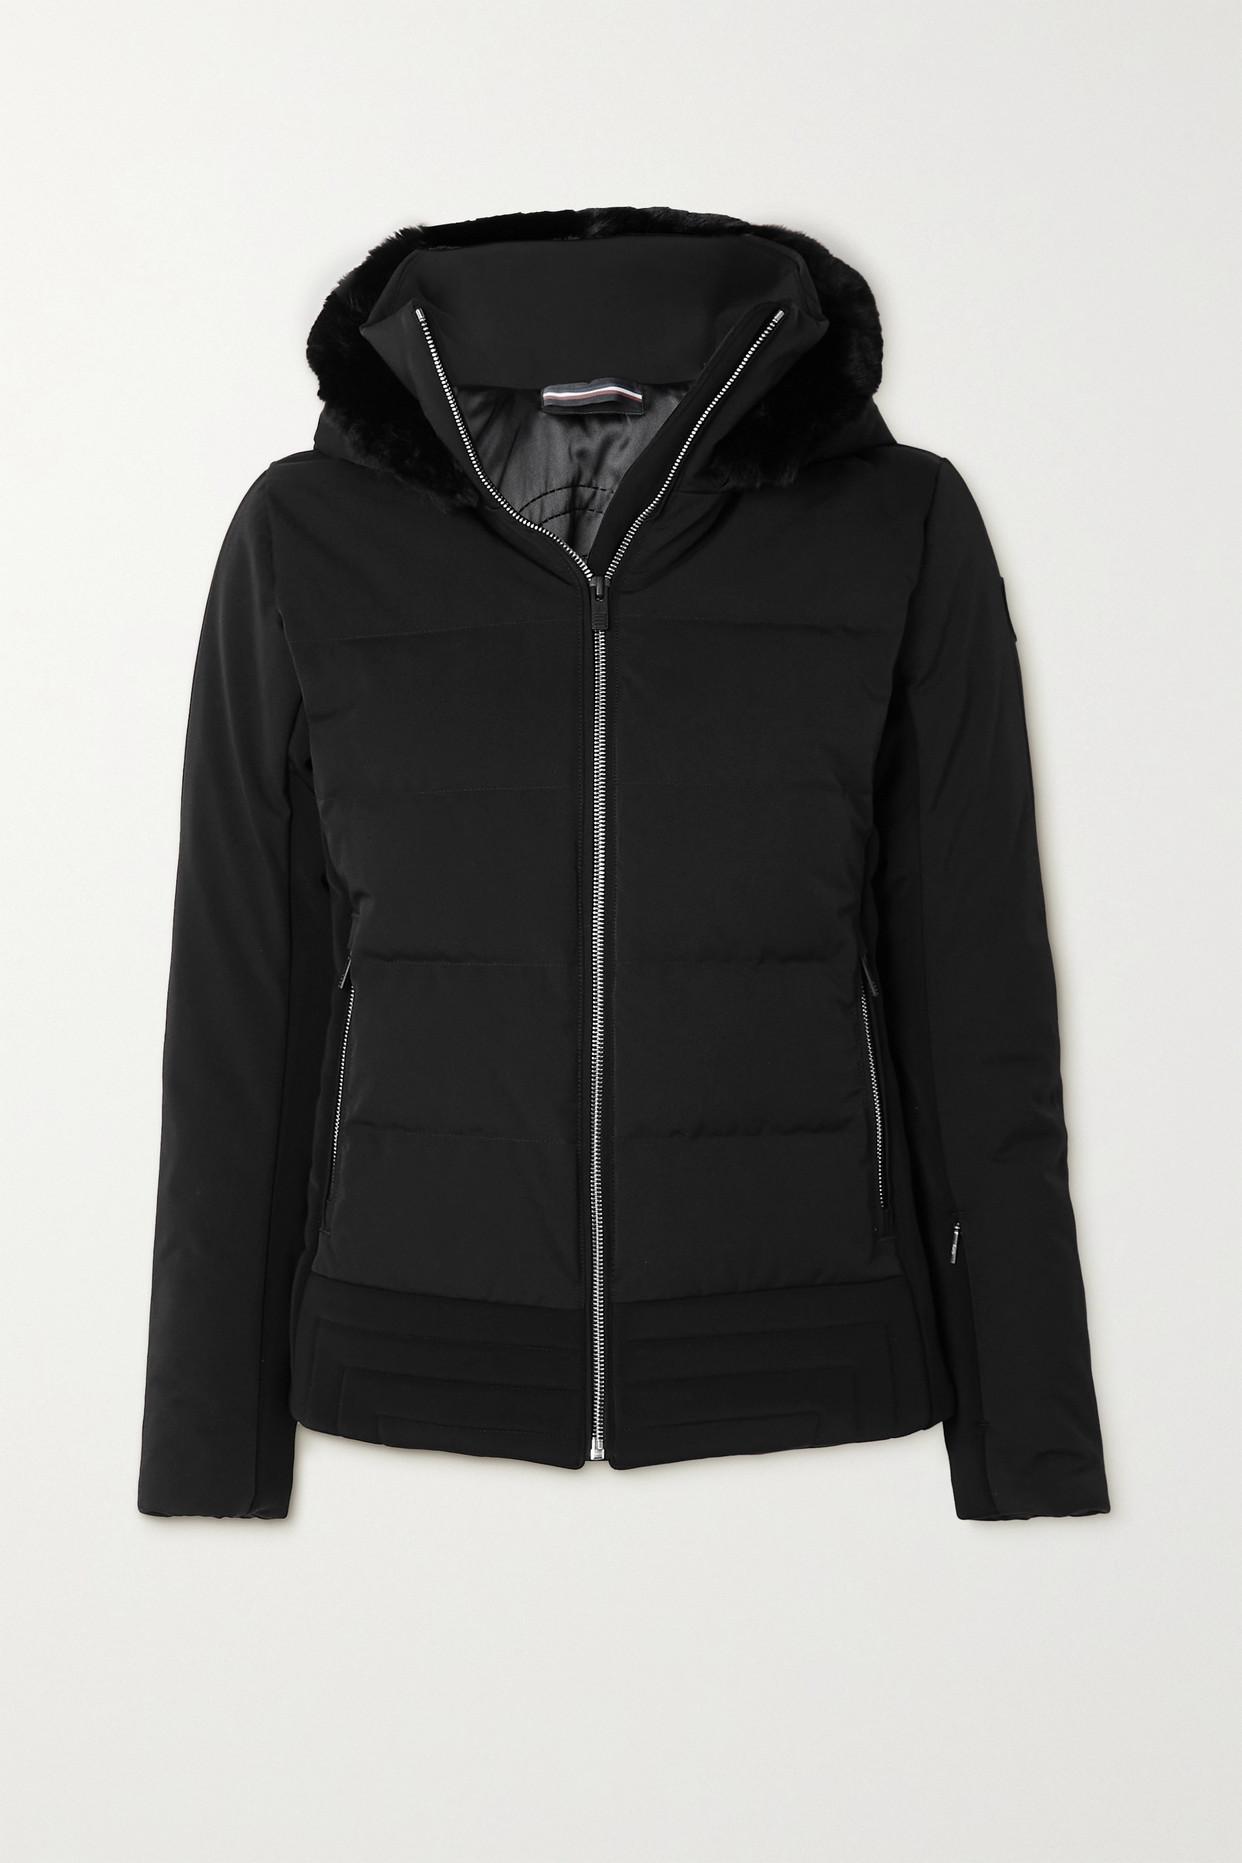 Fur-trimmed Quilted Gardena in Jacket | V Faux Hooded Black Down Shell Ski Lyst Fusalp